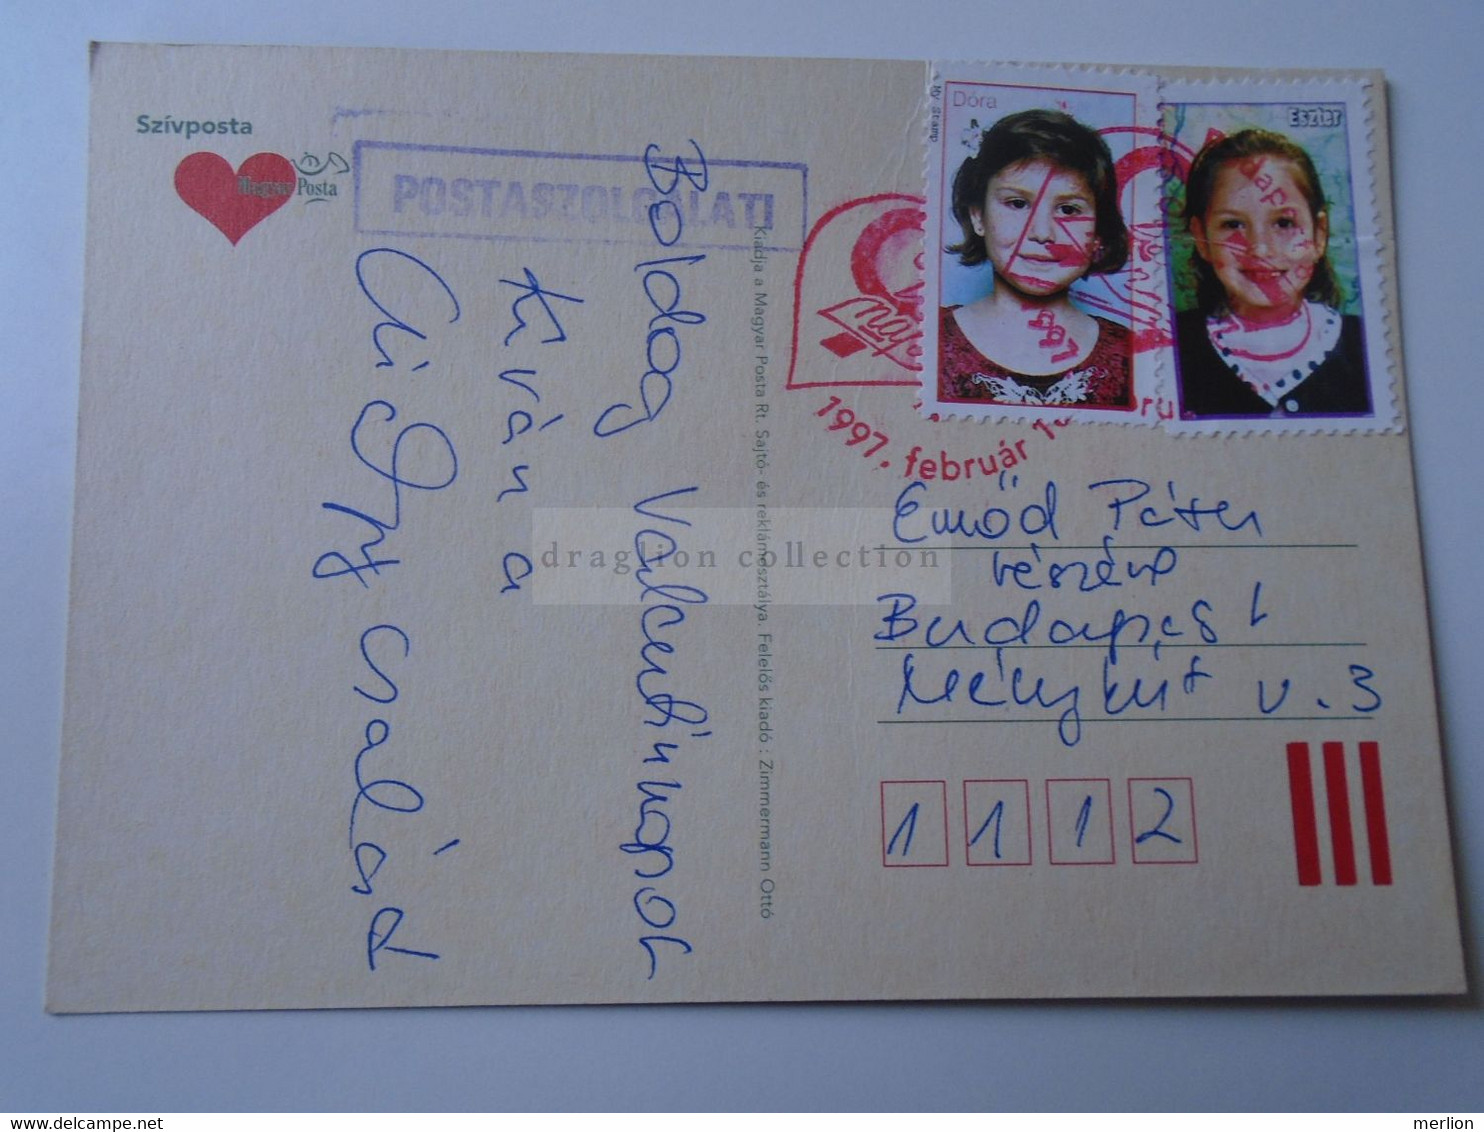 D188962  Hungary  Private Stamps - Szívposta  Postaszolgálati   1997   Magyar Posta - Poststempel (Marcophilie)